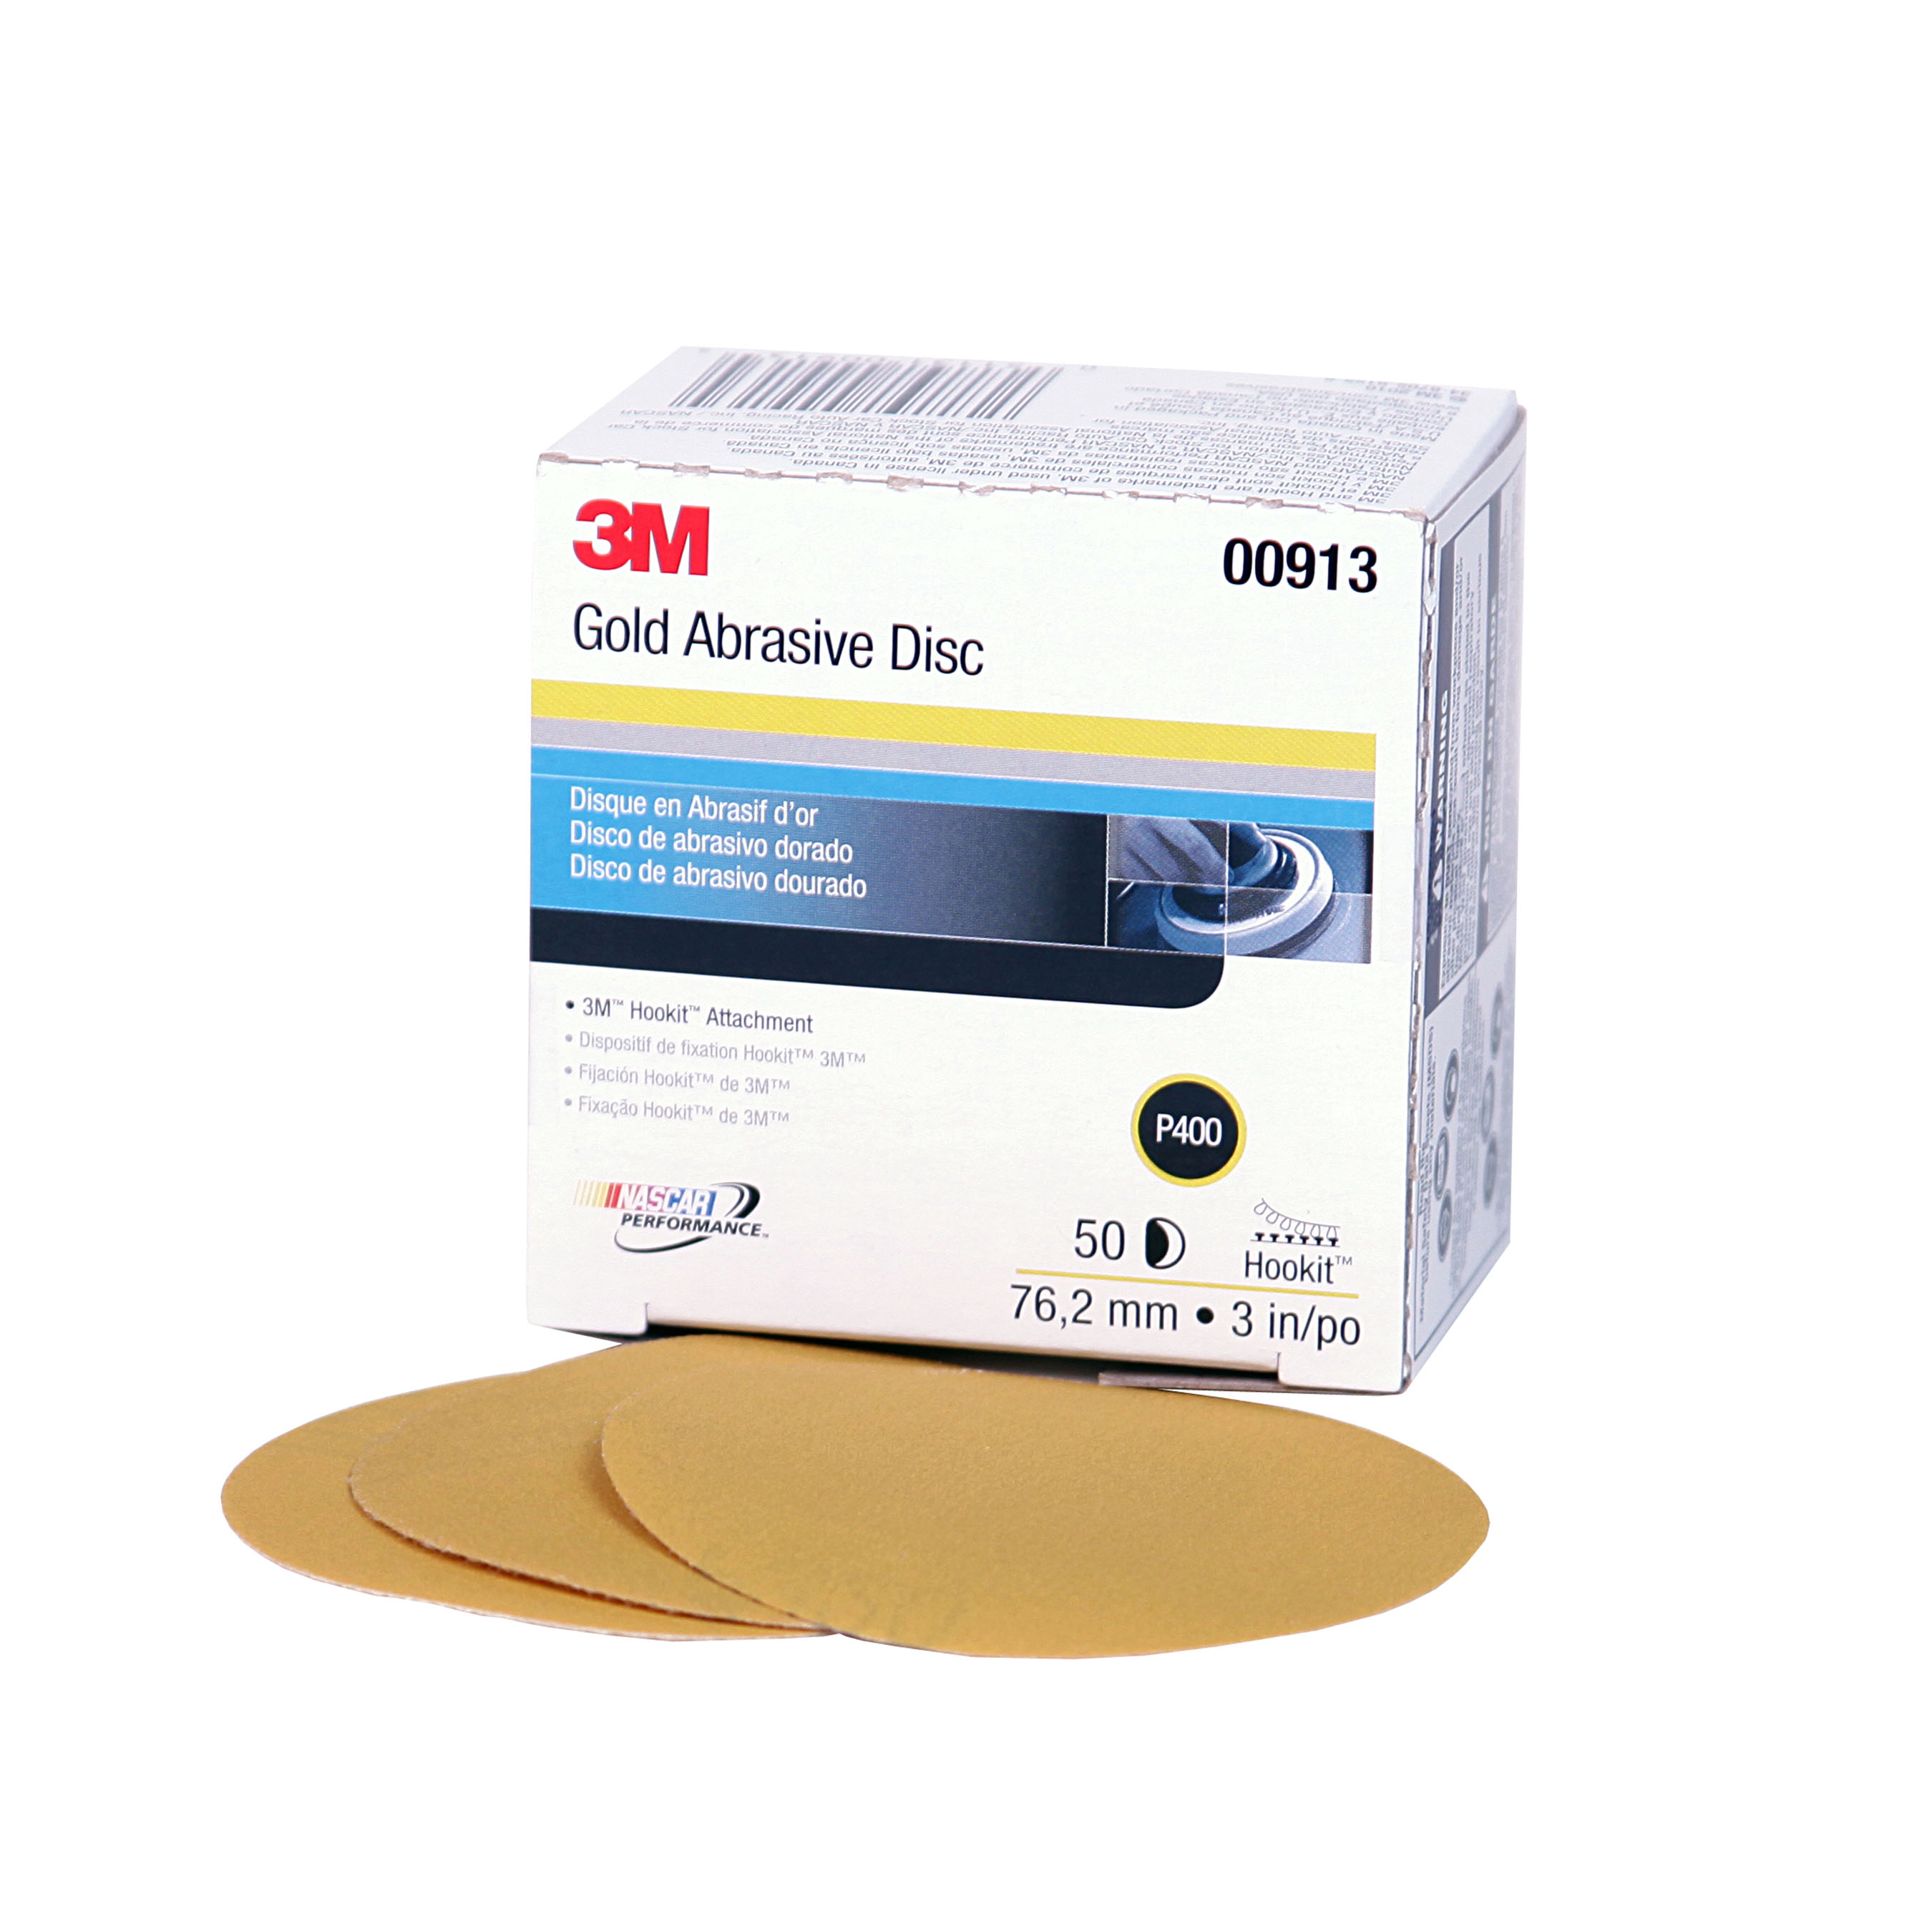 P320 Grit 3M Hookit Paper Disc 210U Pack of 100 5 Diameter 5 Diameter Aluminum Oxide 